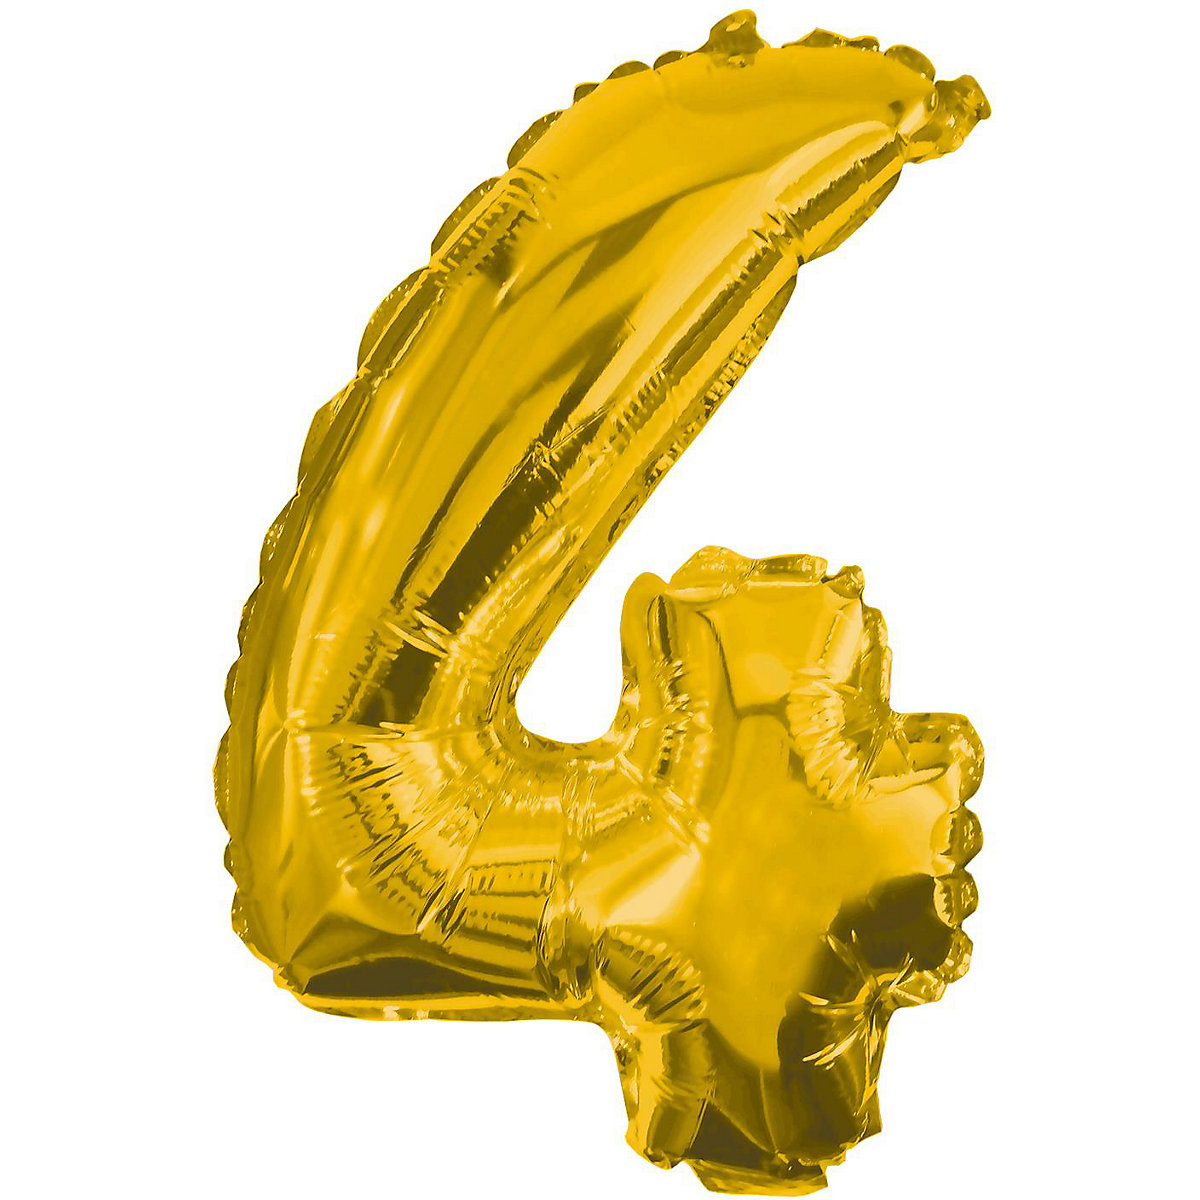 Procos Folienballon Zahl 4 gold 85 cm inkl. Pustehalm